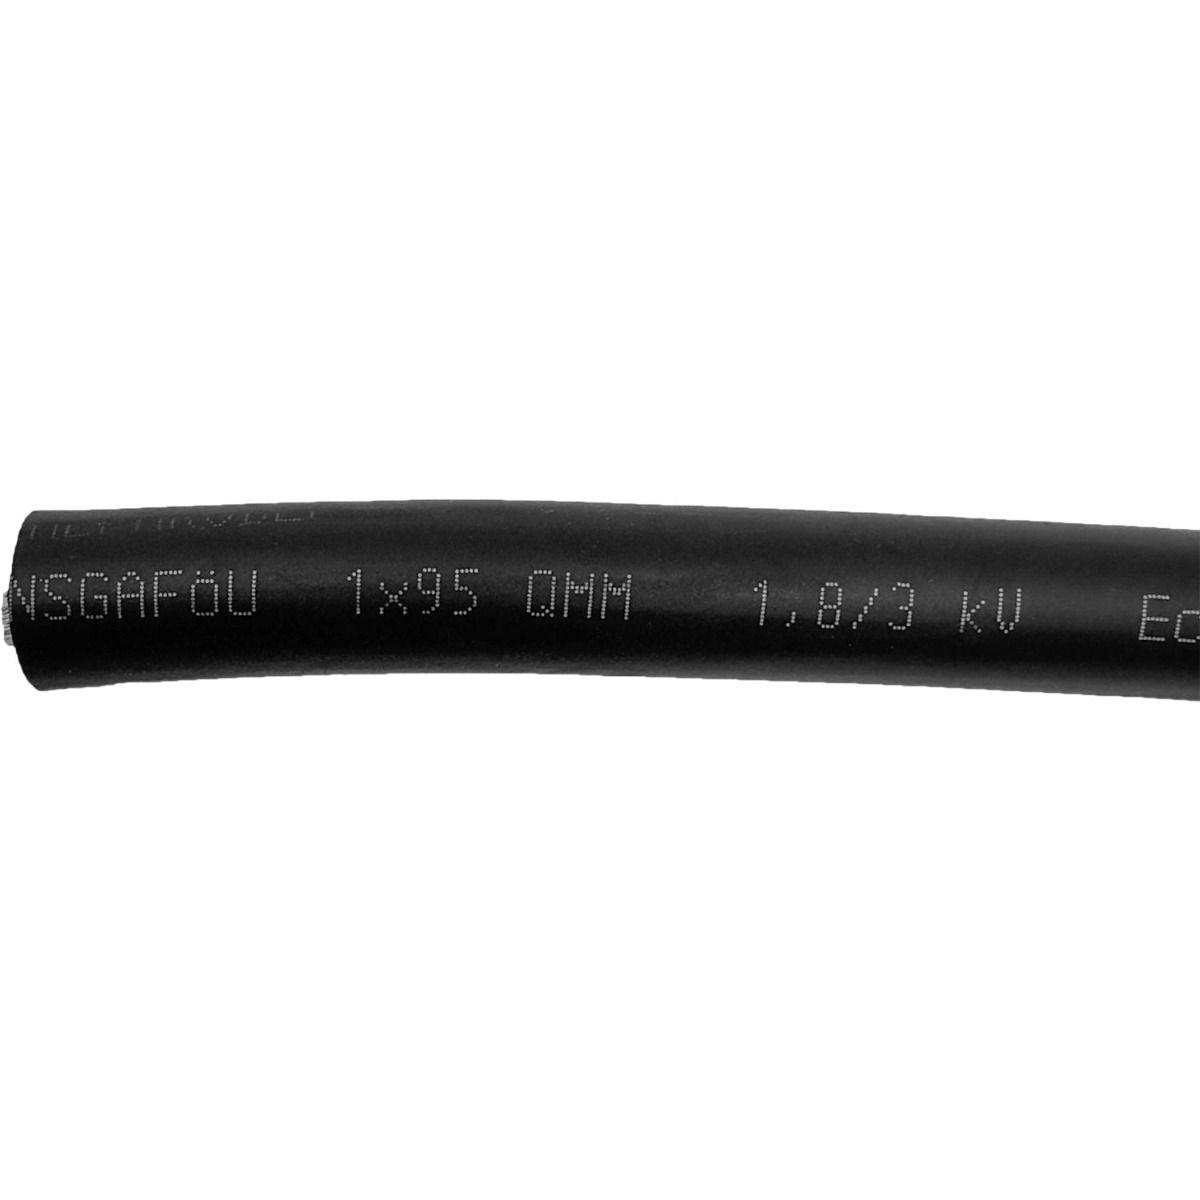 95mm² Helukabel Nsgaföu 1.8/3kV Black. Pair of Battery Cables. 0.5 to 5 Meters. Crimped - VoltaconSolar